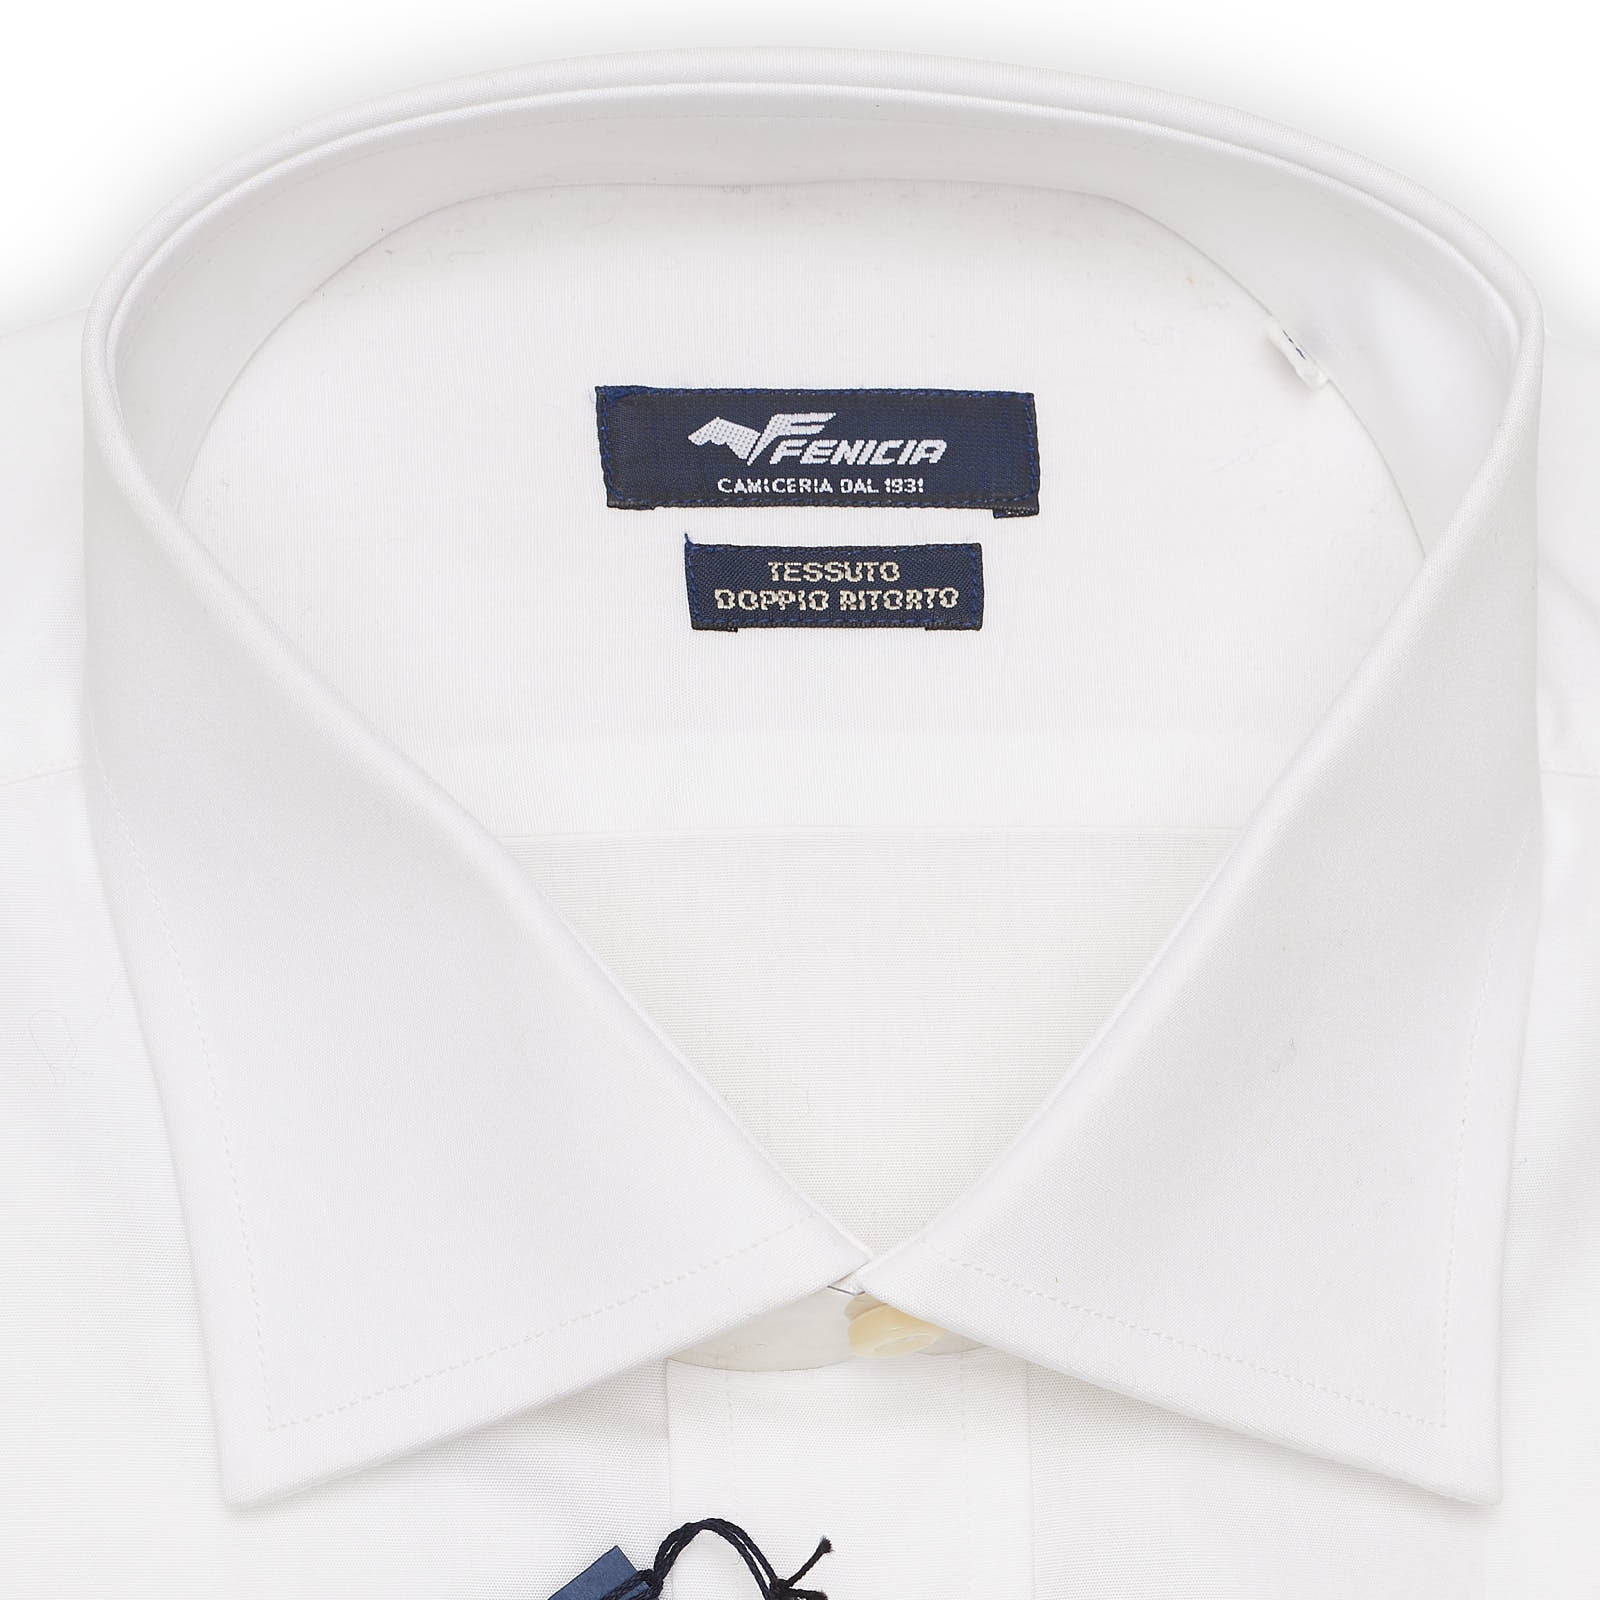 FENICIA Milano White Cotton French Cuff Dress Shirt EU 43 NEW US 17